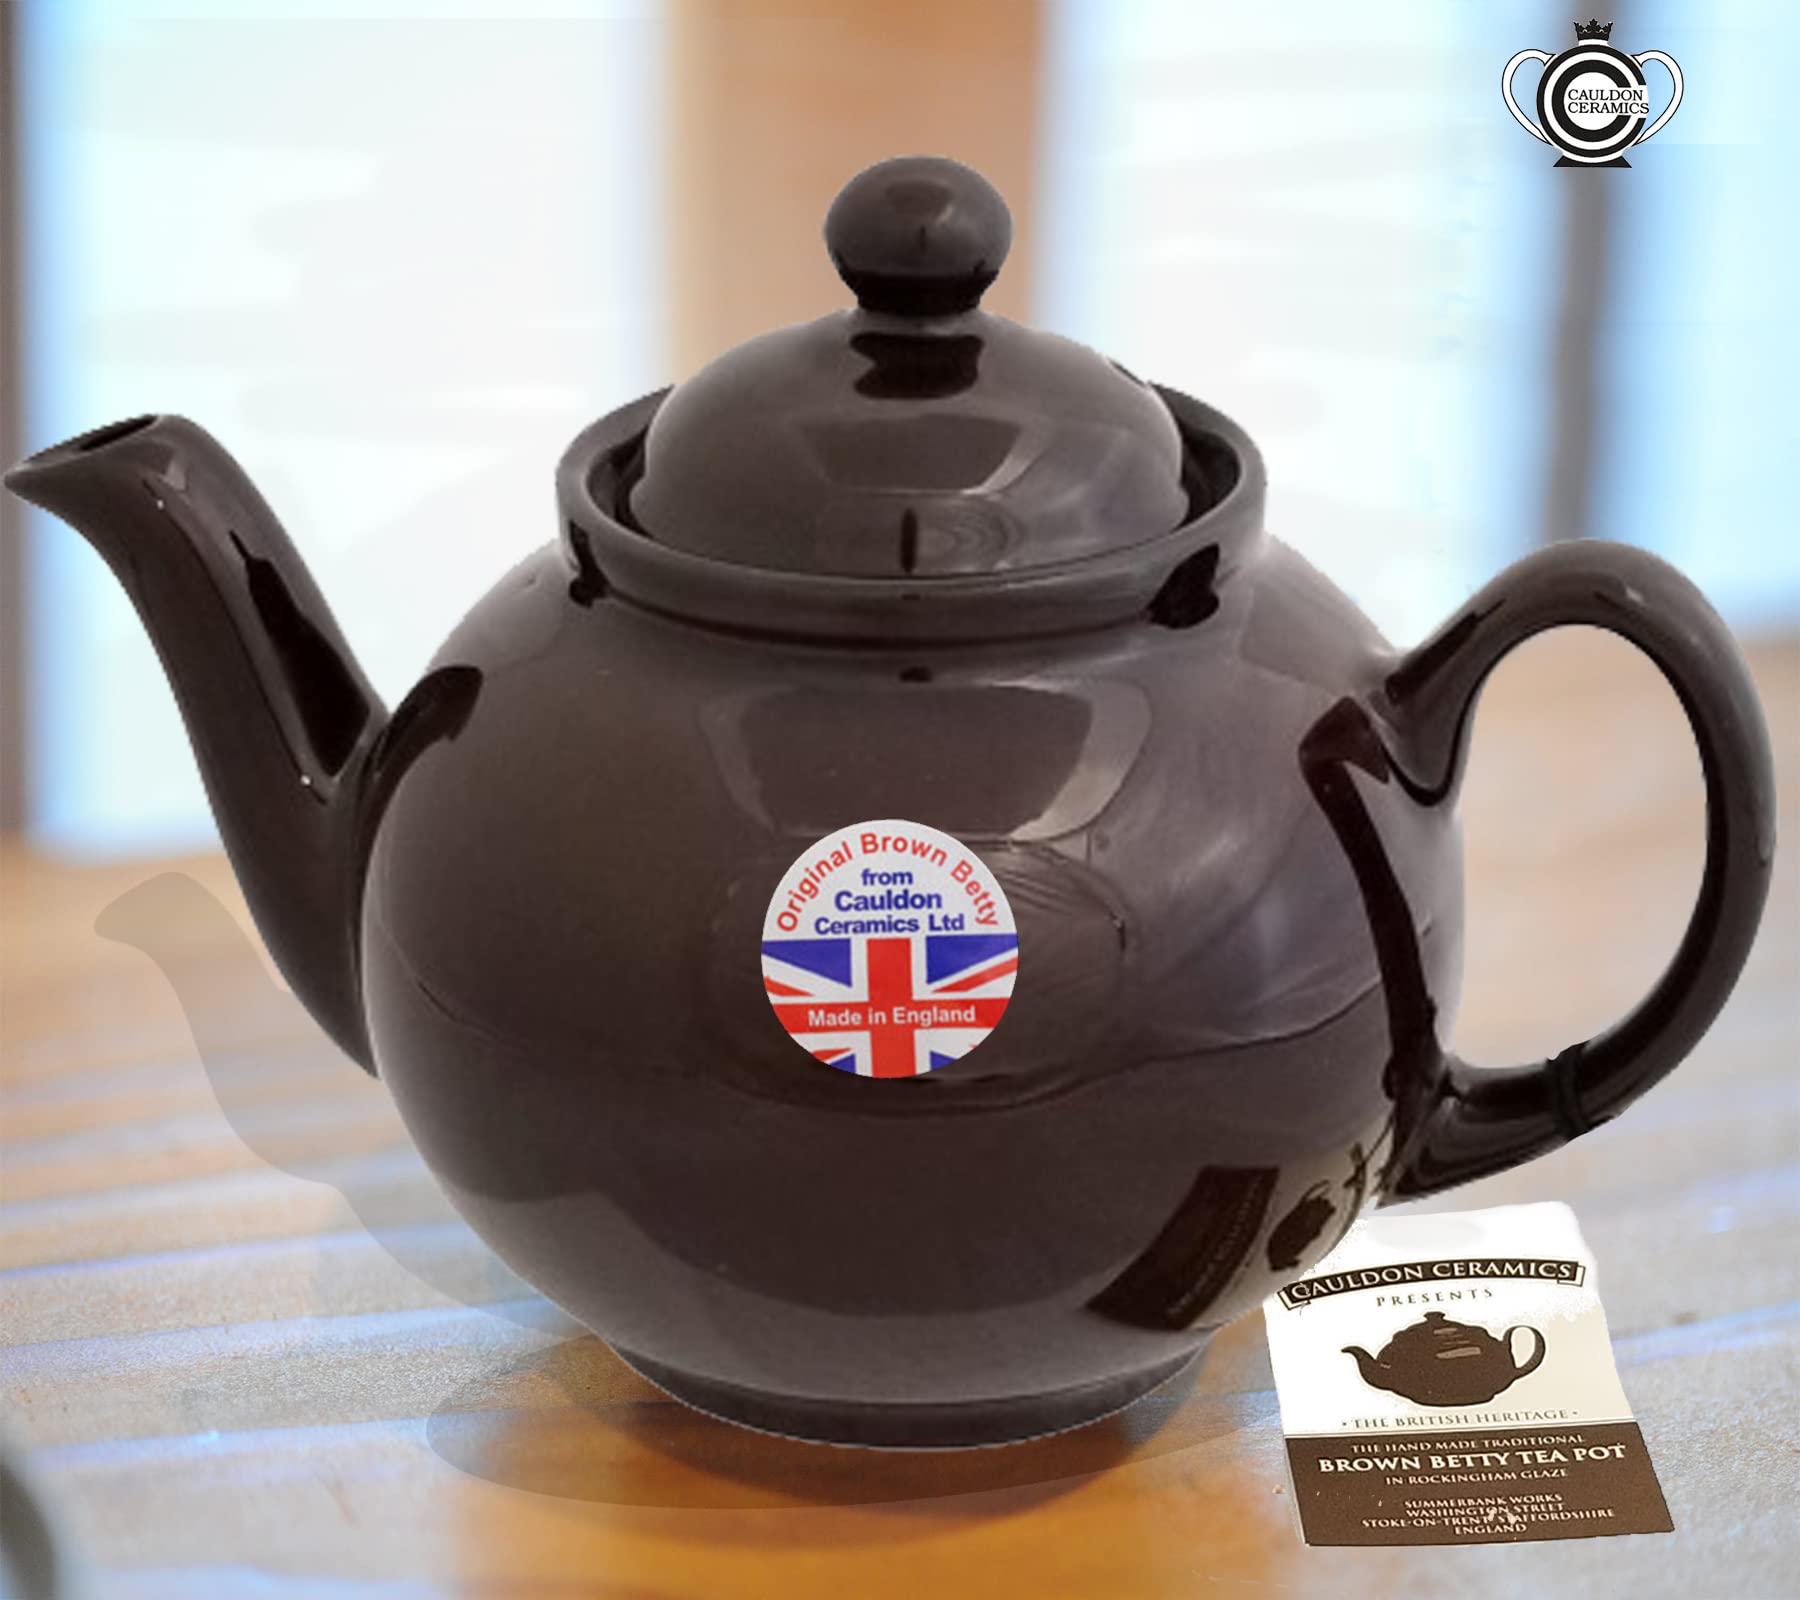 Cauldon Ceramics Brown Betty Tea Pot | Hand Made 4 Cup Brown Betty Teapot | Classic Ceramic Teapot for Loose Leaf Tea or Teabags | 36 Fl Oz